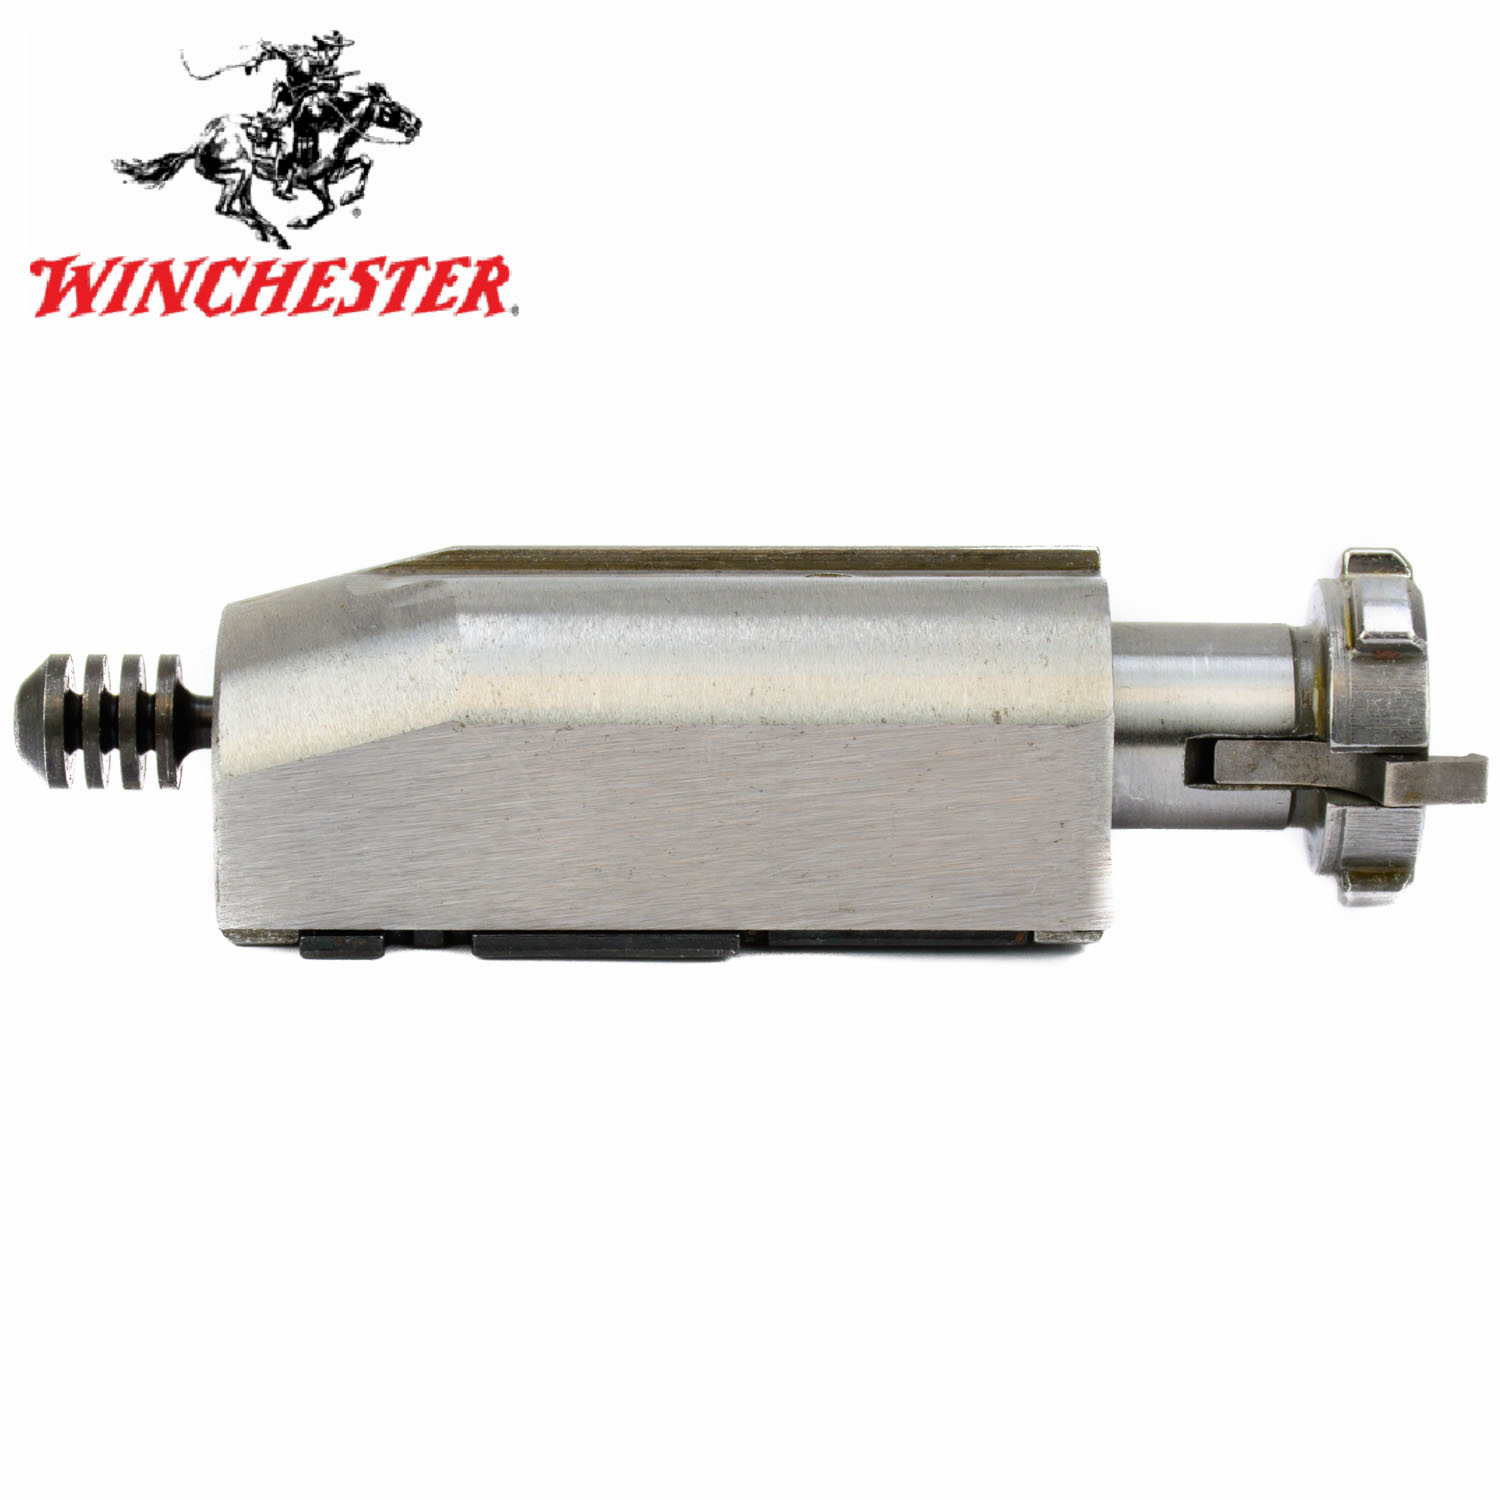 Description: Winchester 1200 / 1300 Complete 12 Gauge Breech Bolt Complete,...